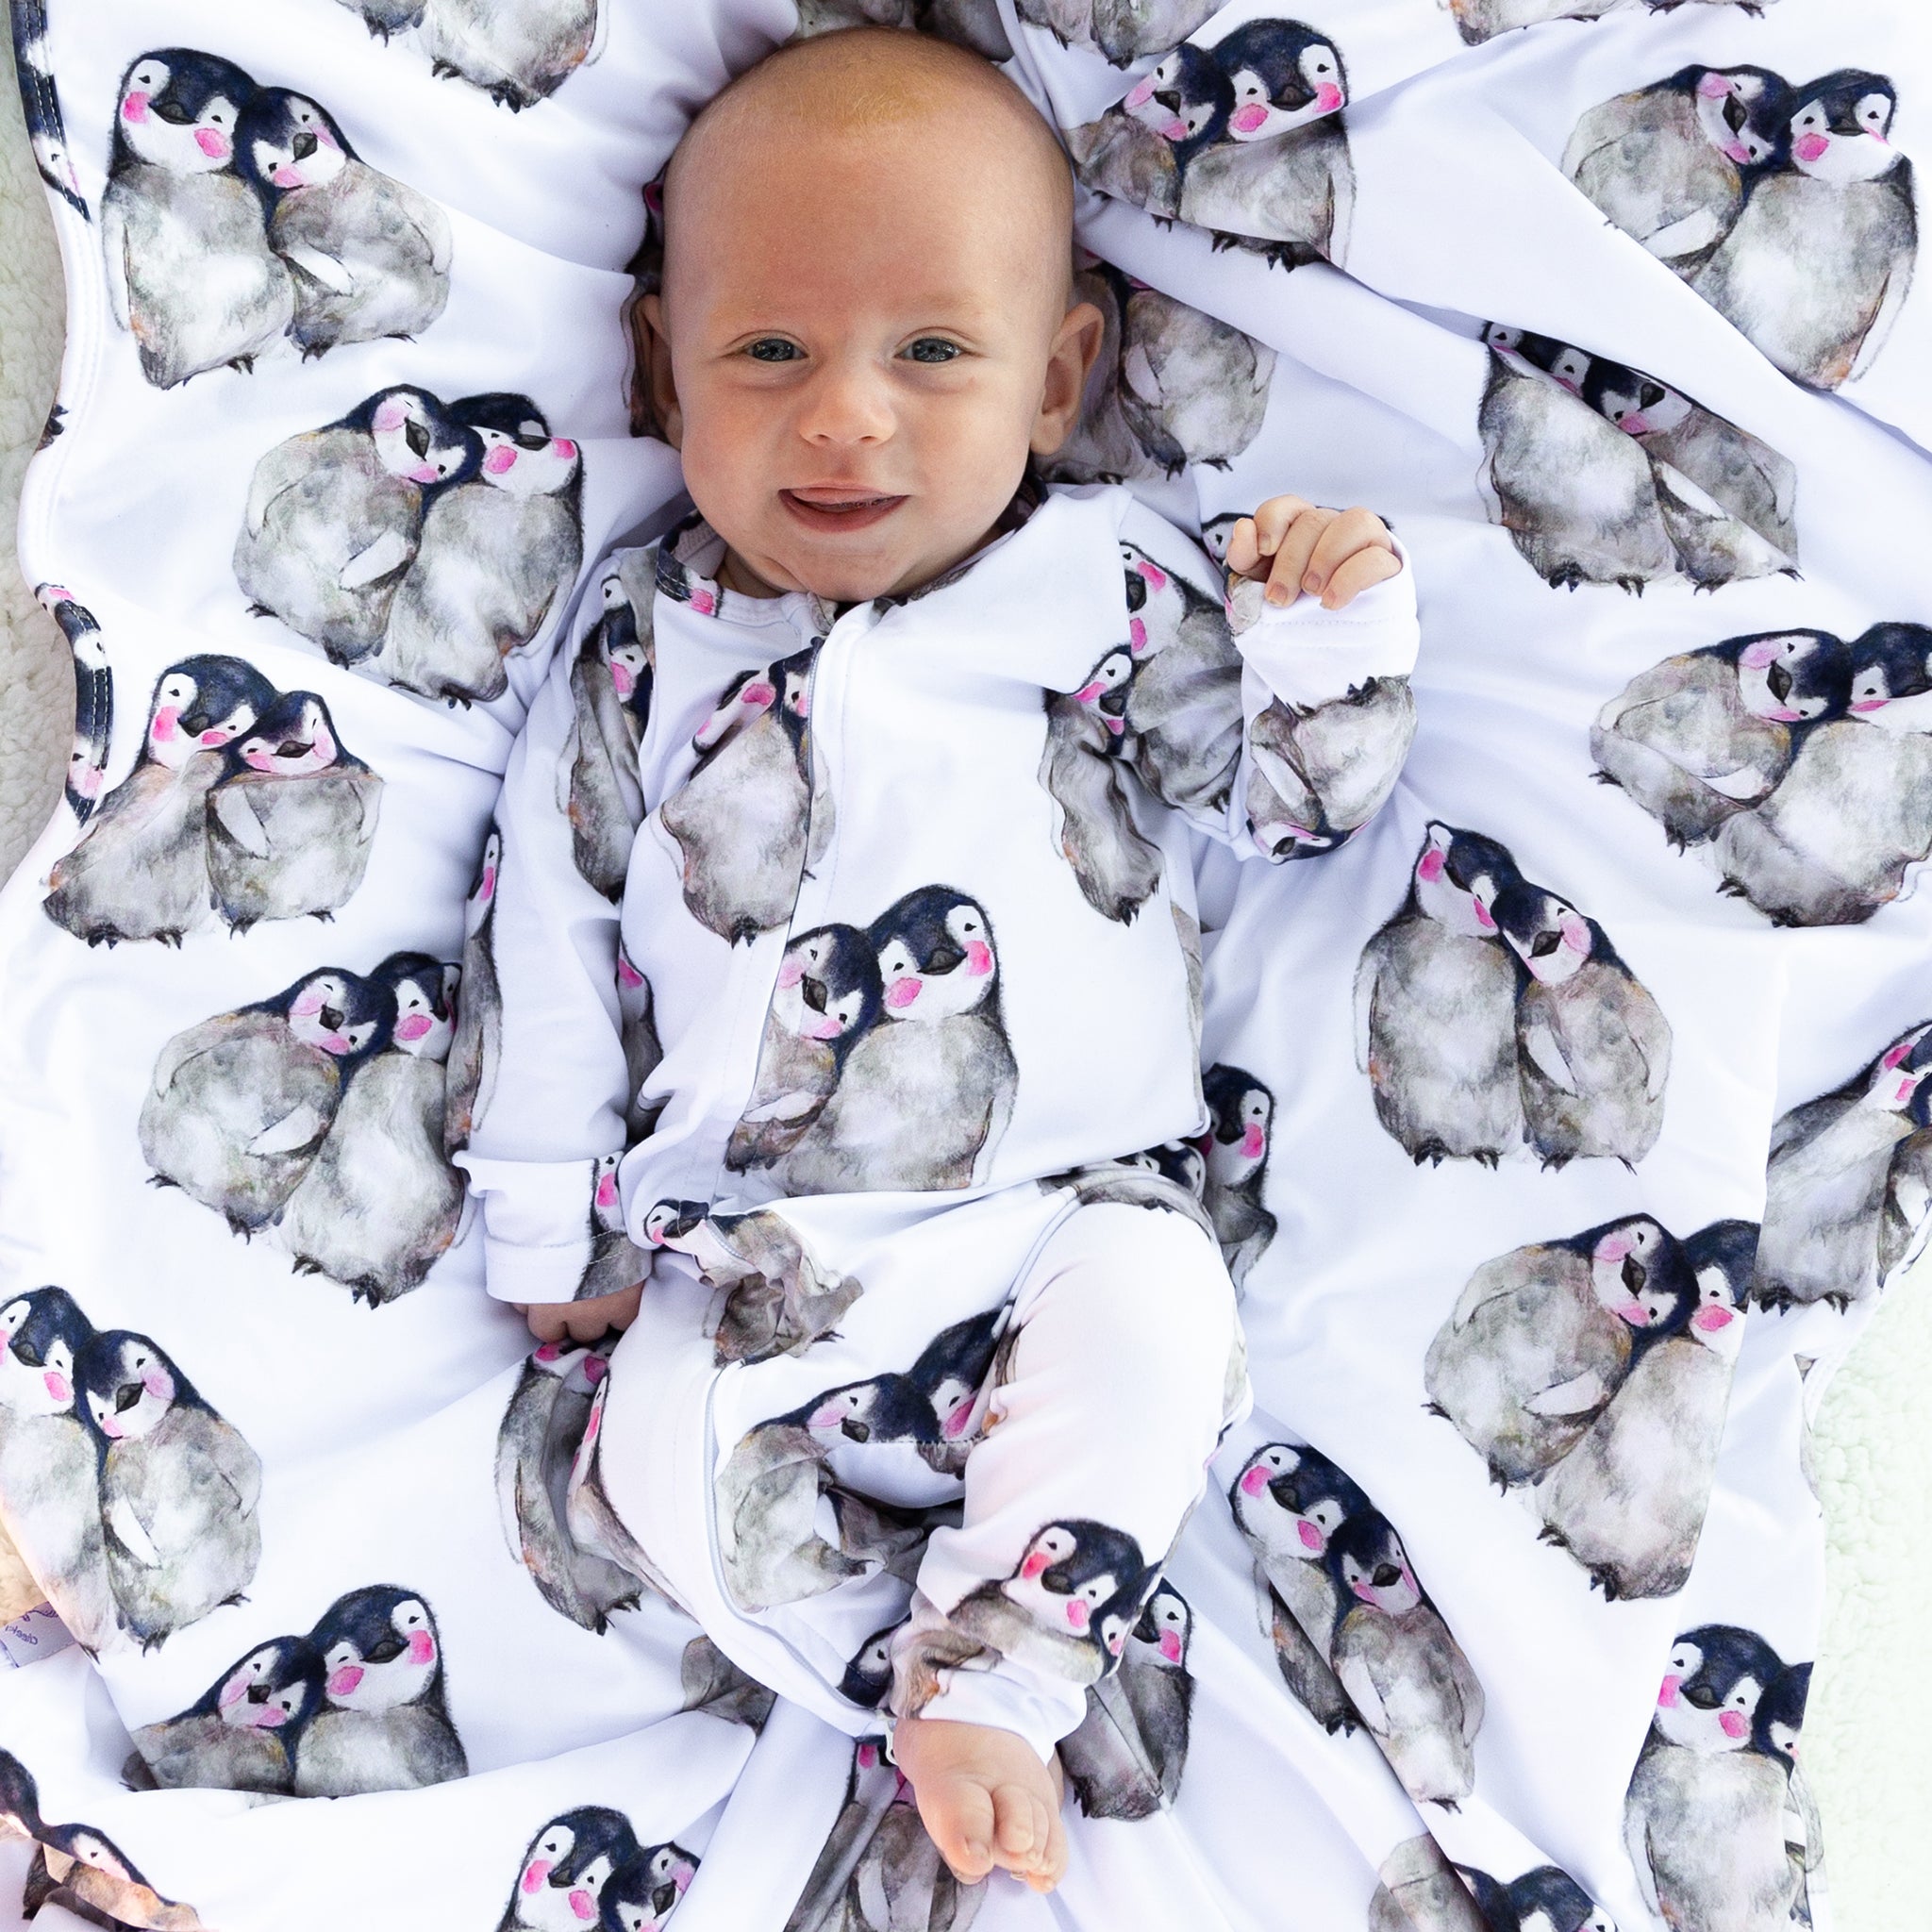 Baby Penguins Long Sleeve Double Zip Sleepsuit - Cheeky Chickadee Store